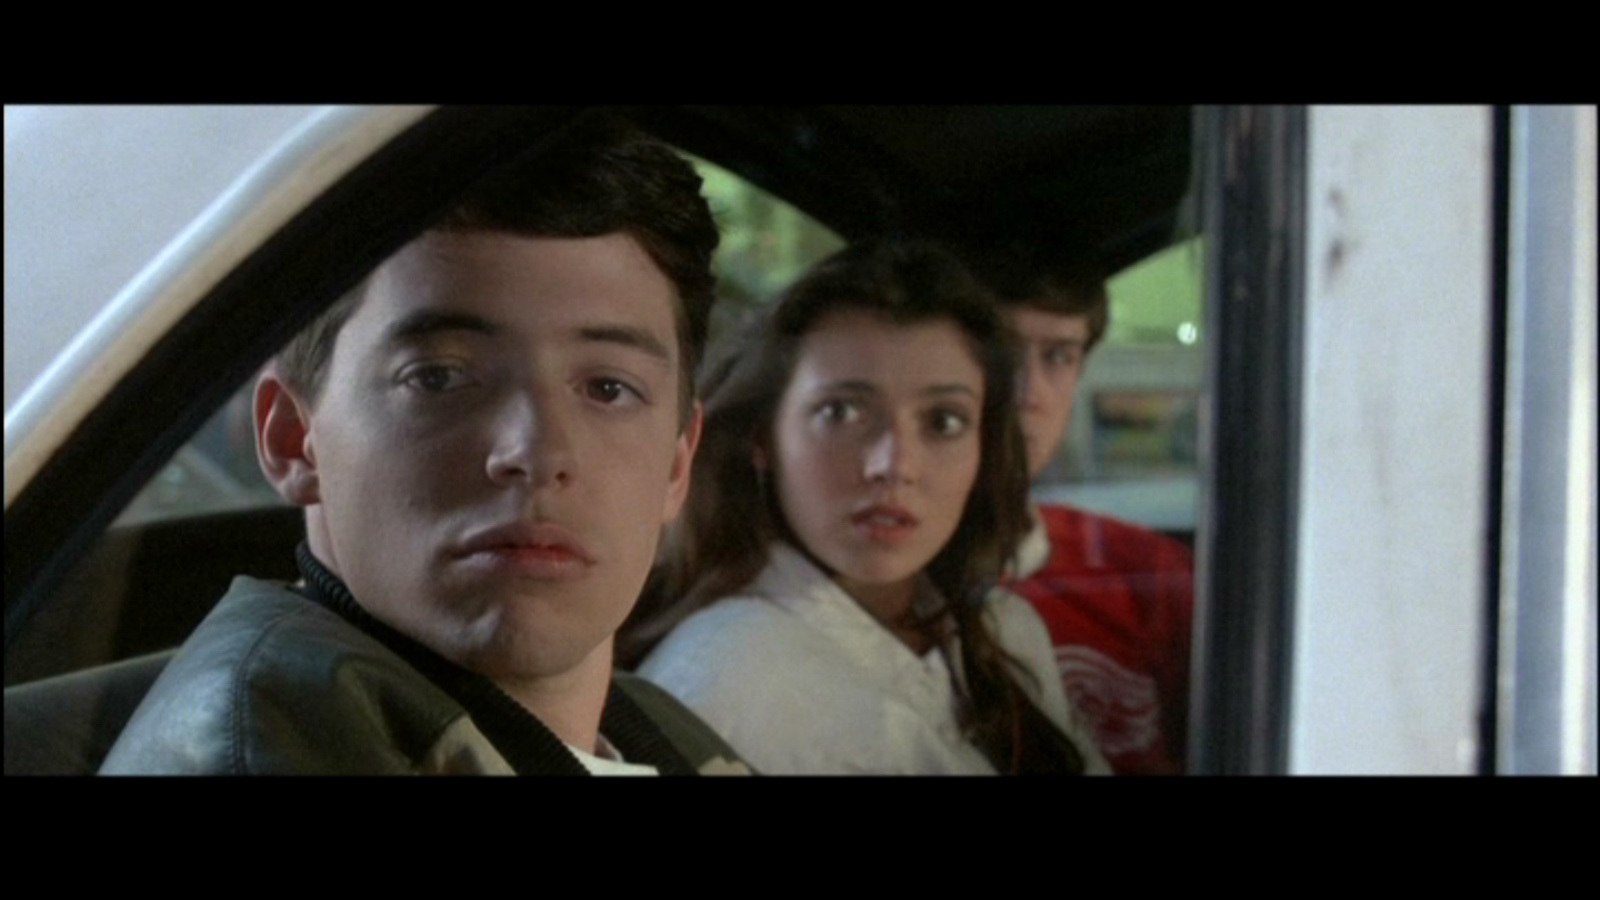 Ferris Bueller's Day Off - Ferris Bueller Image (2541034) - Fanpop